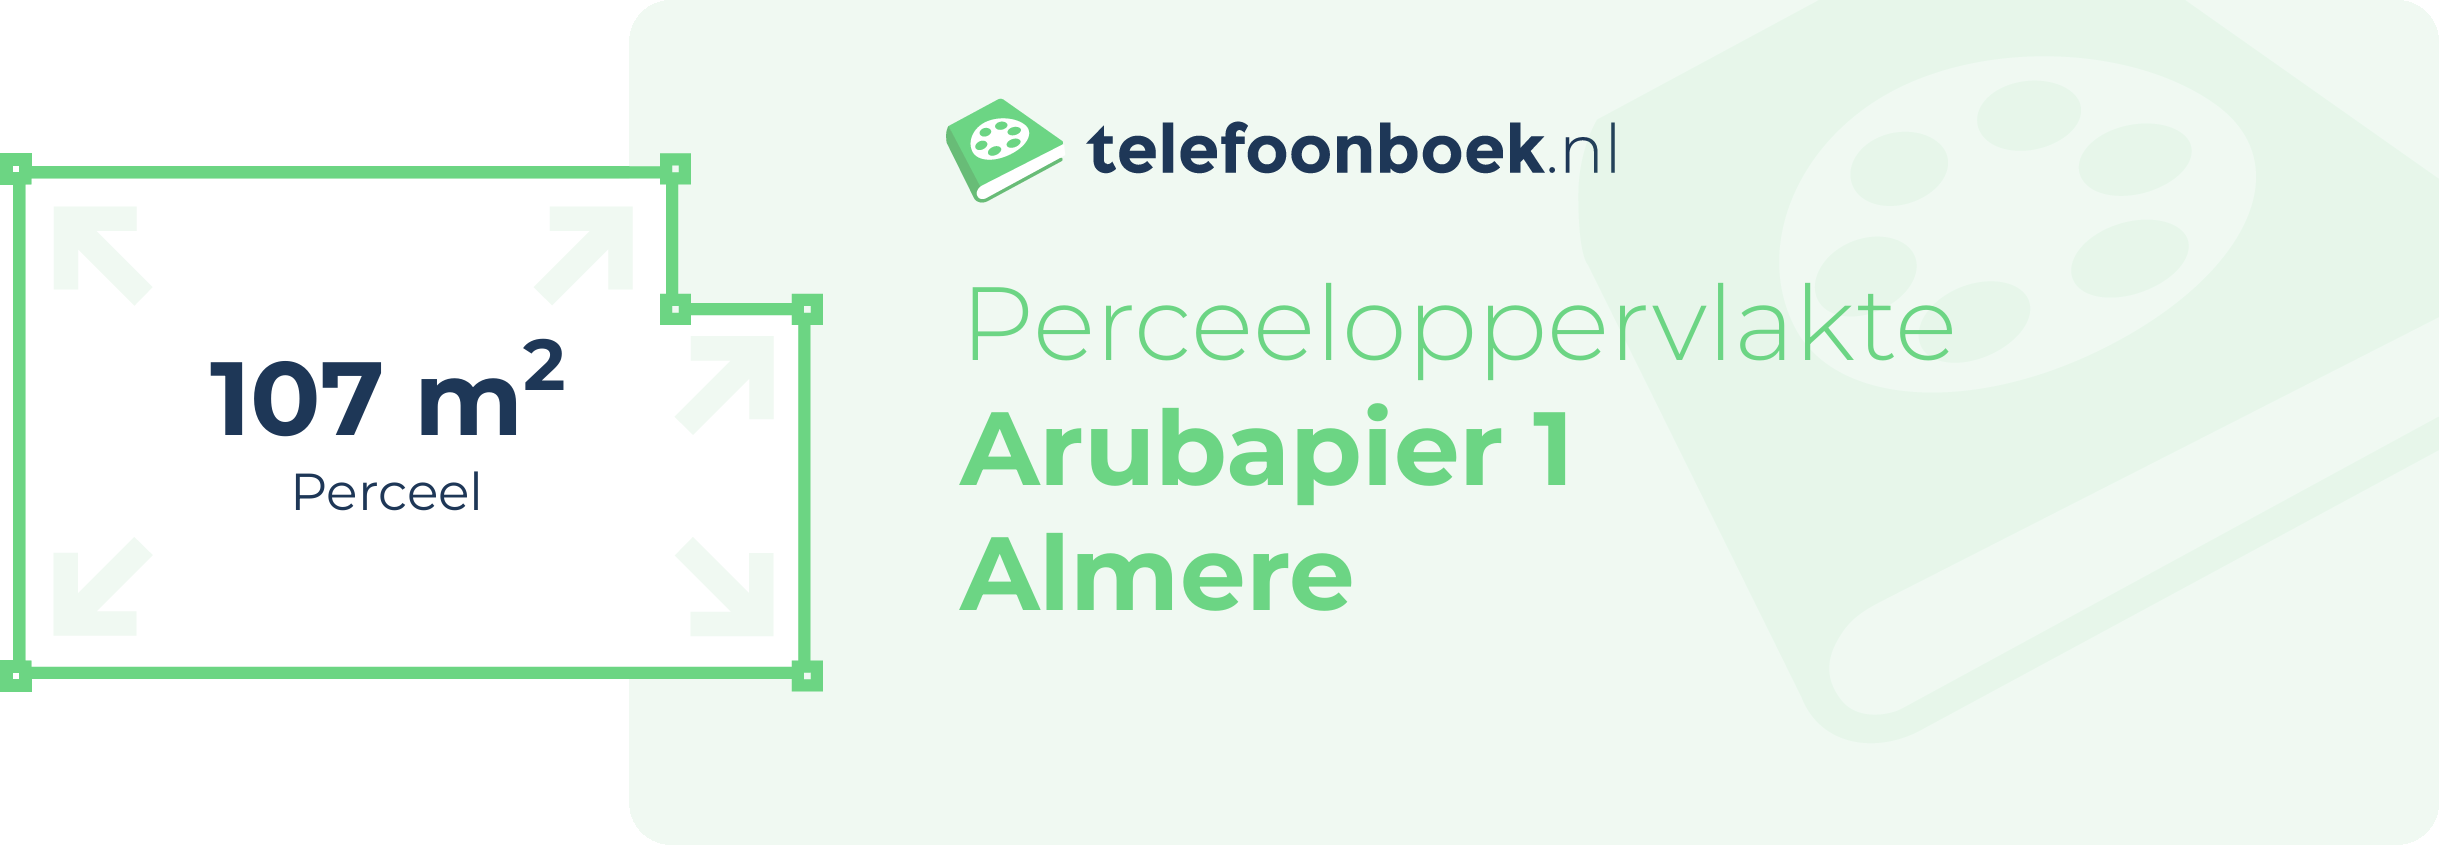 Perceeloppervlakte Arubapier 1 Almere